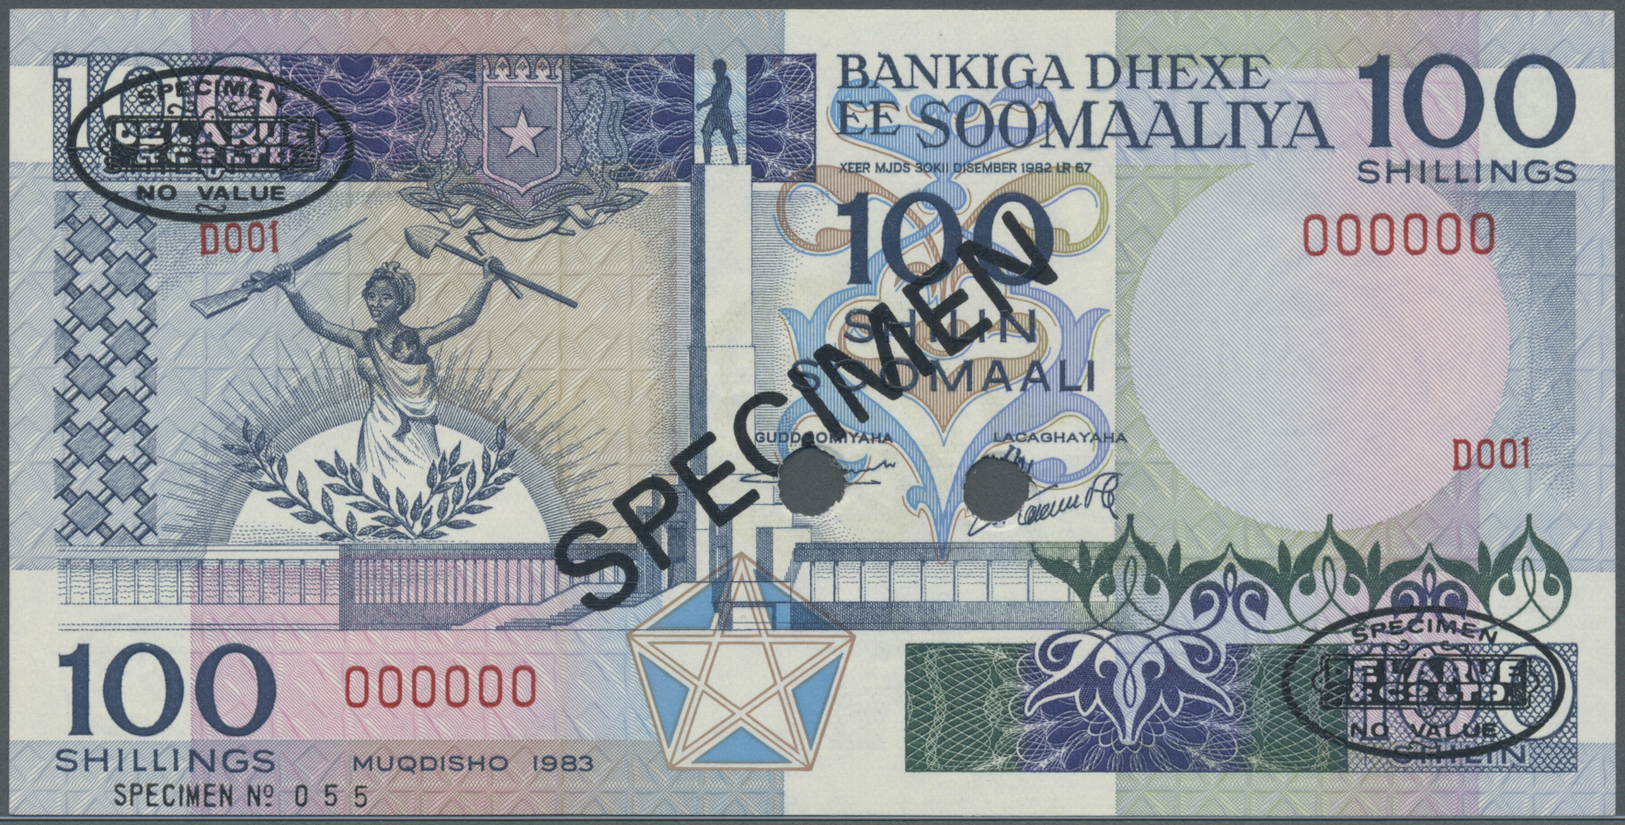 02941 Somalia: 100 Shillings 1983 Specimen P. 35as In Condition: UNC. - Somalie